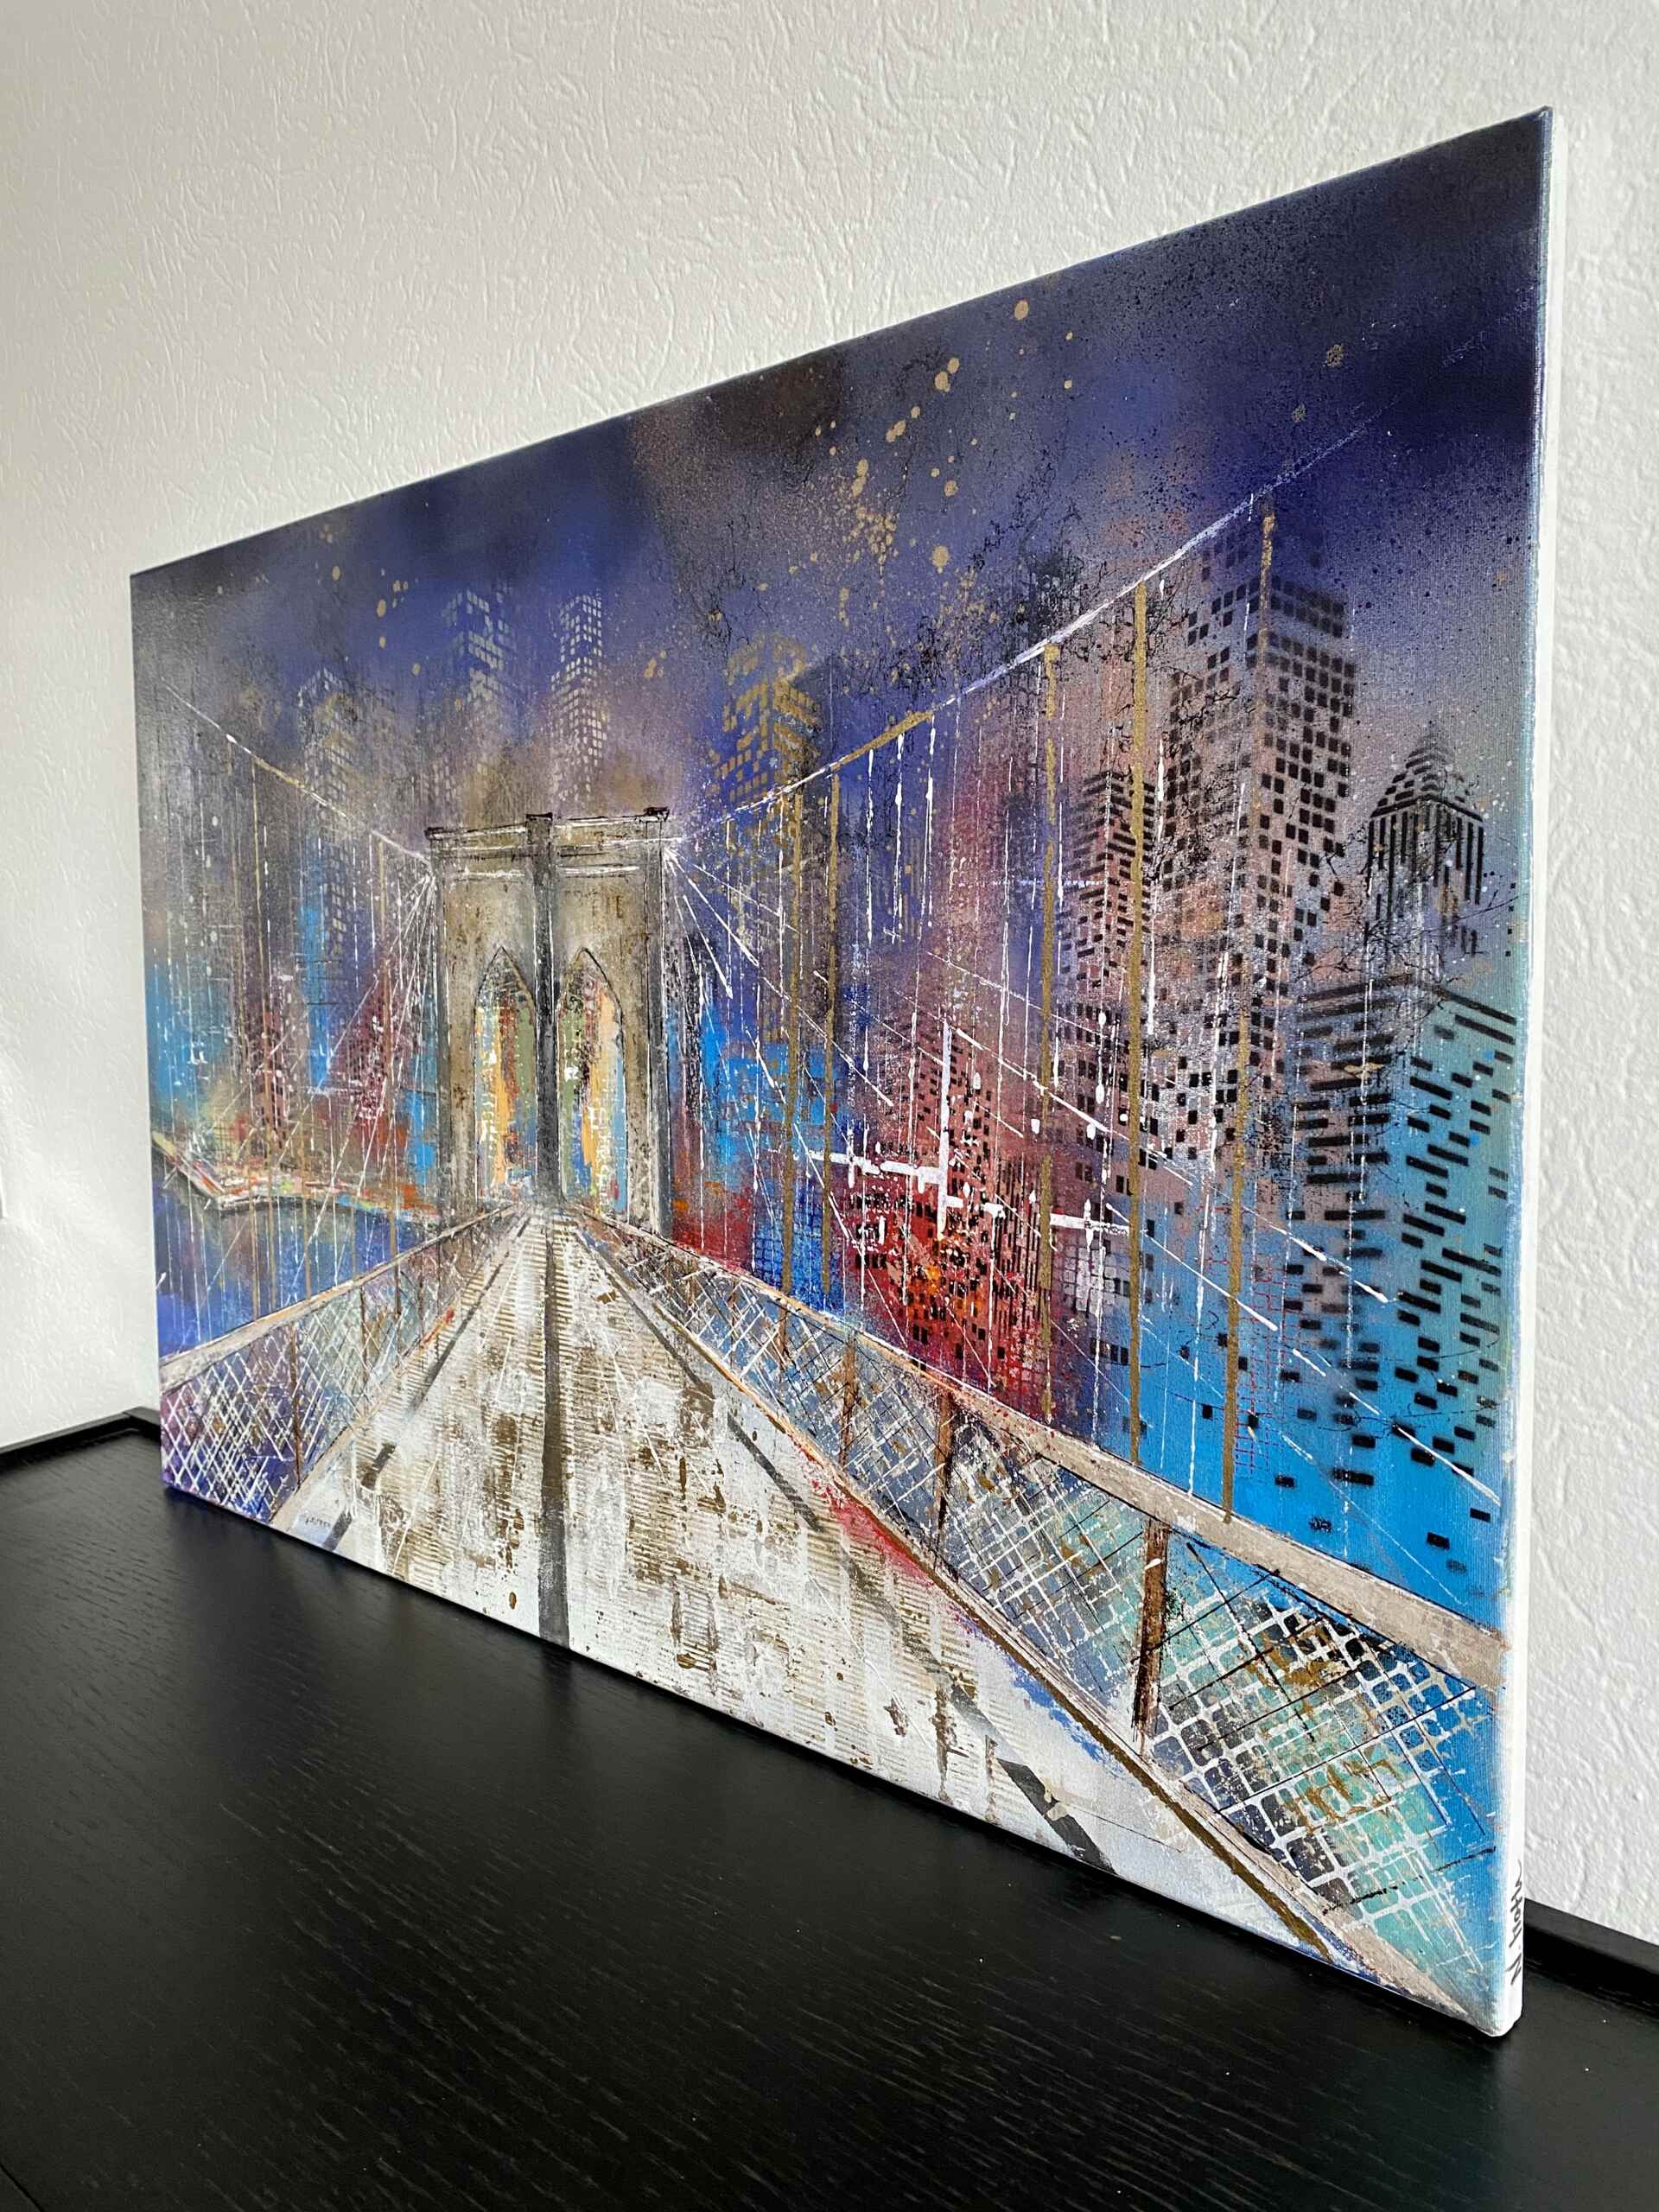 Side view of artwork "Brooklyn Bridge" by Nina Groth